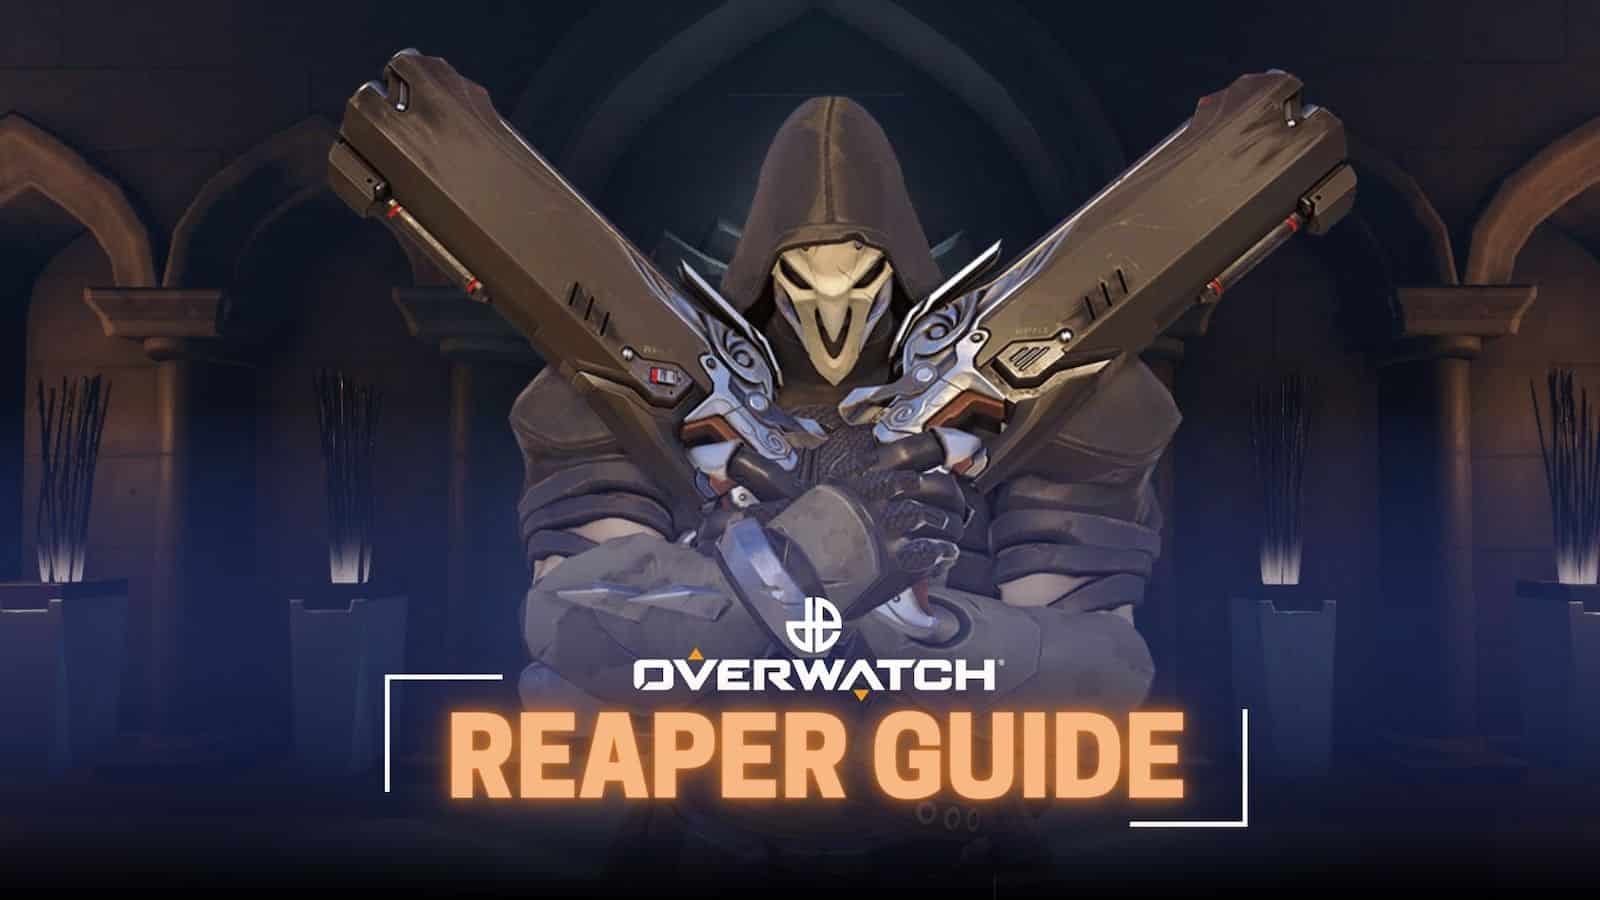 Overwatch reaper guide